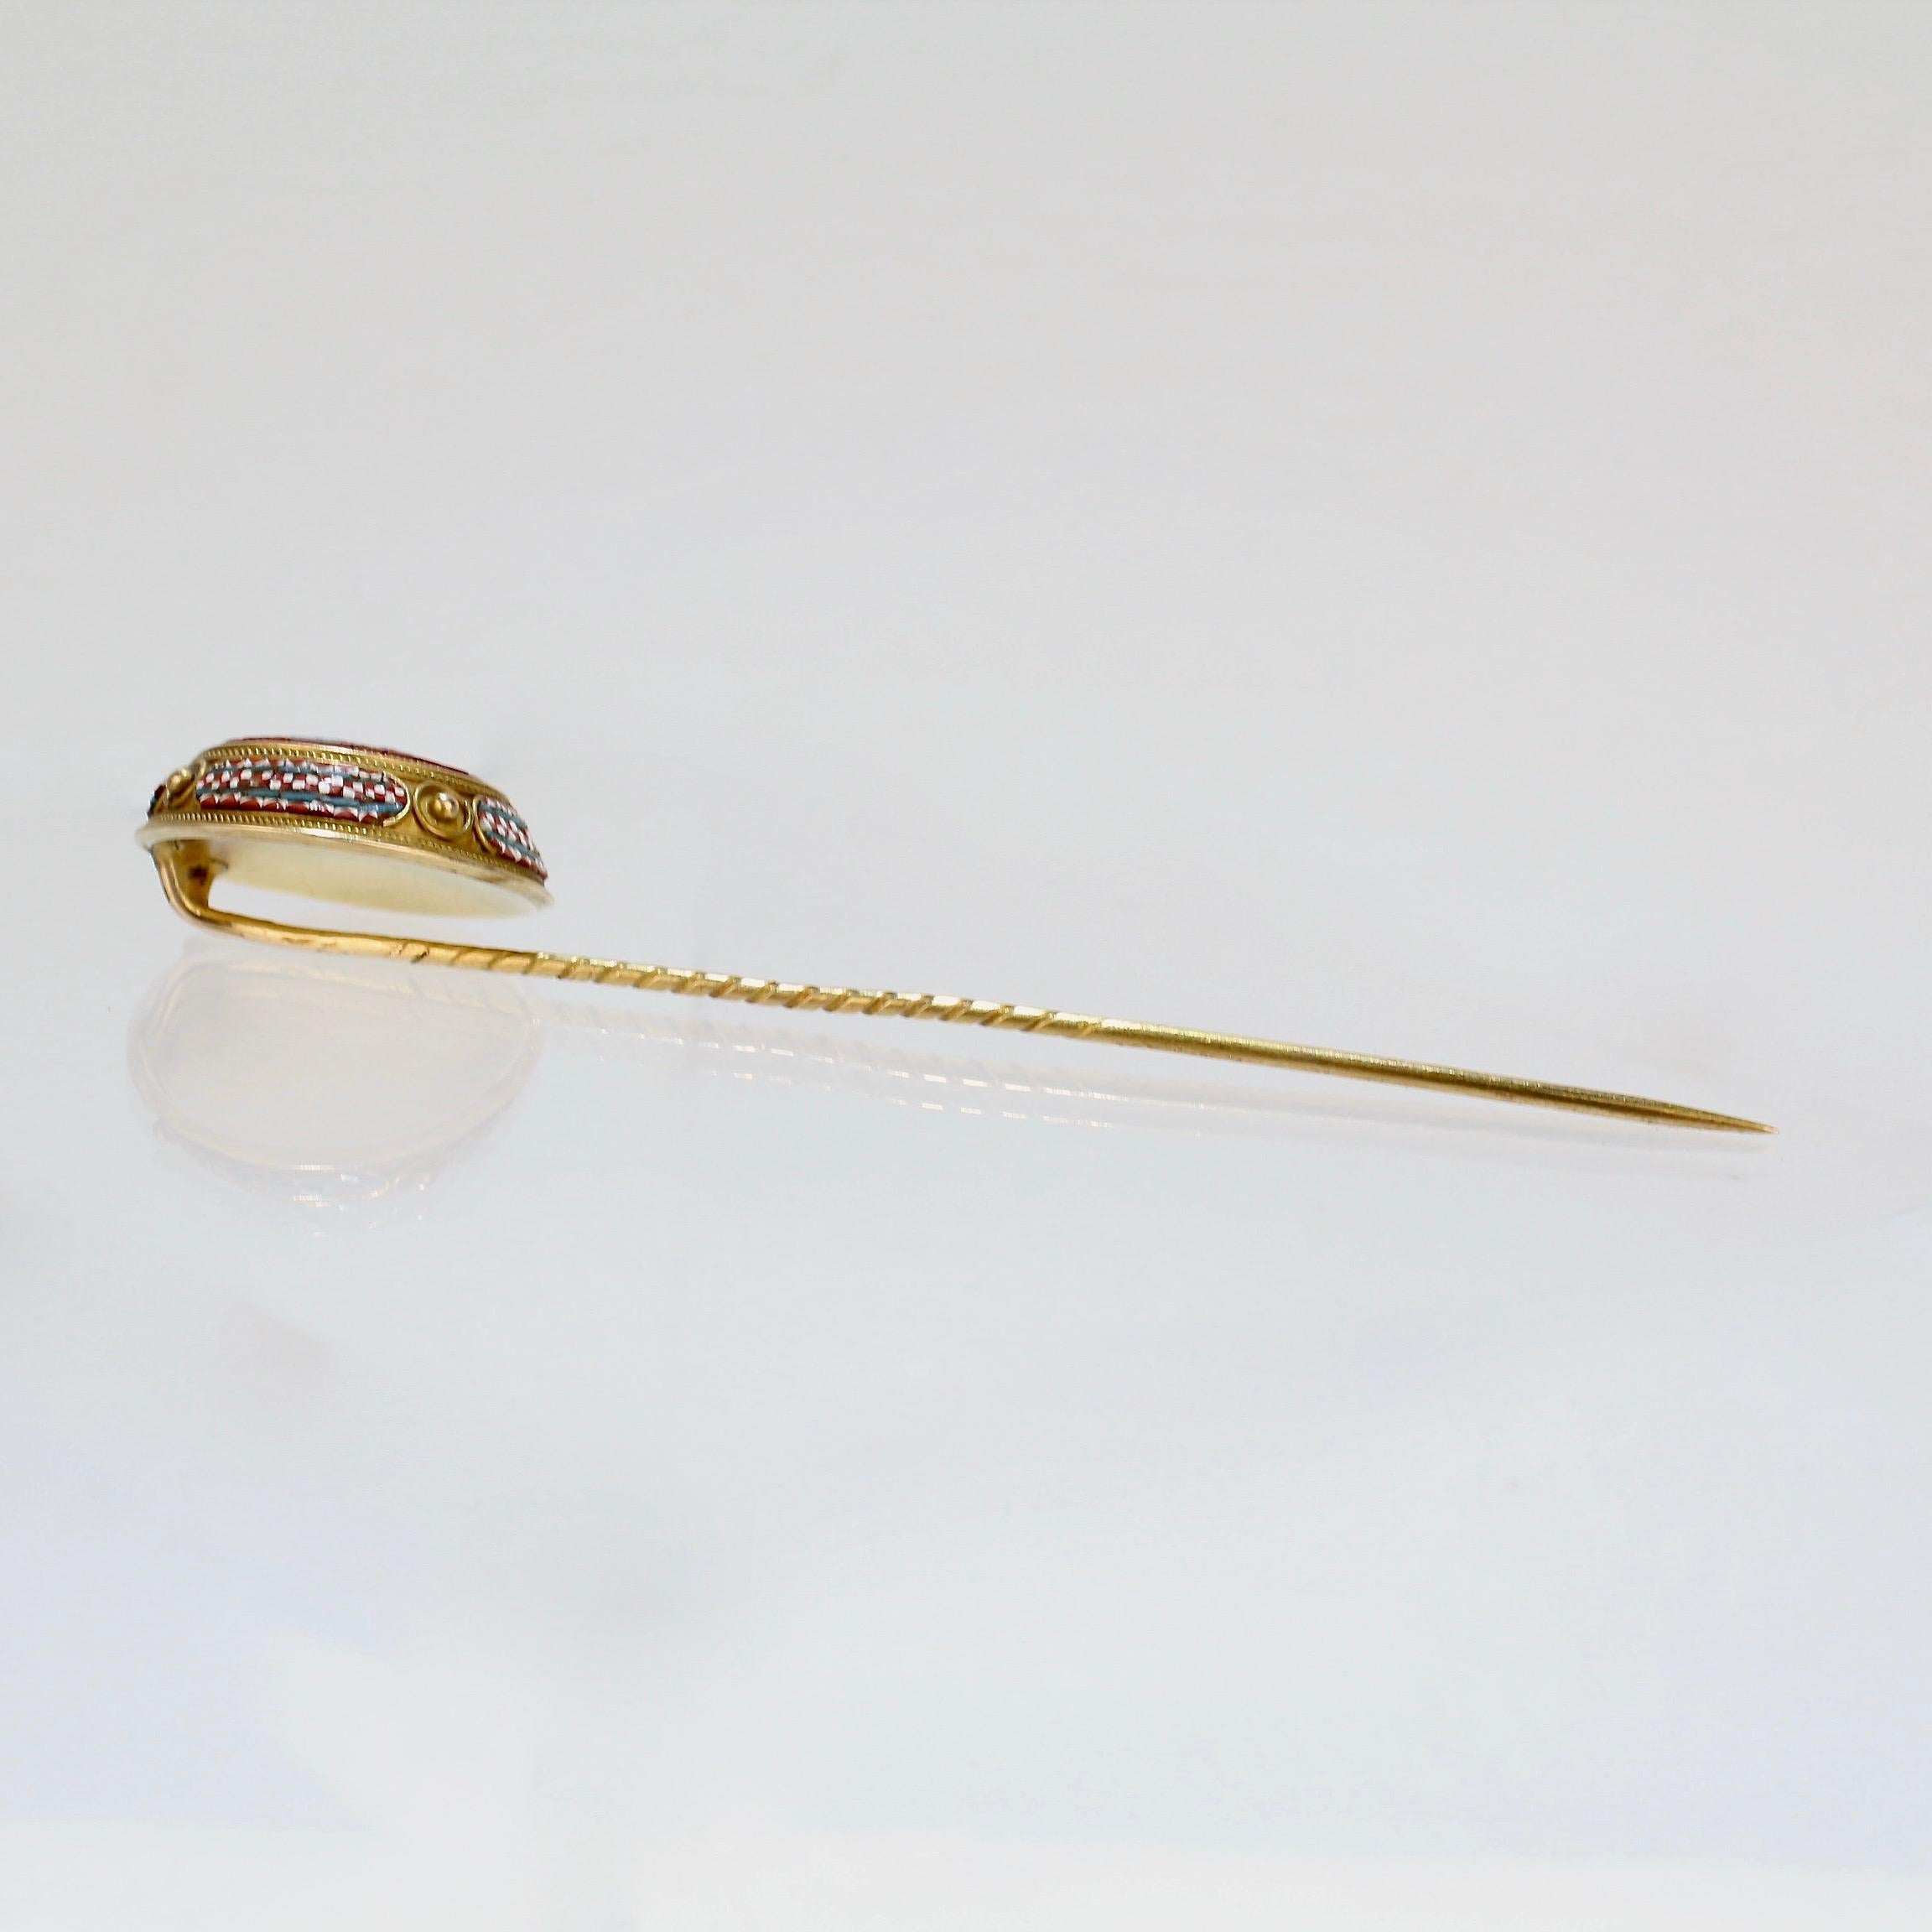 Antique Grand Tour 18 Karat Gold Etruscan Revival Micromosaic Stick Pin 2